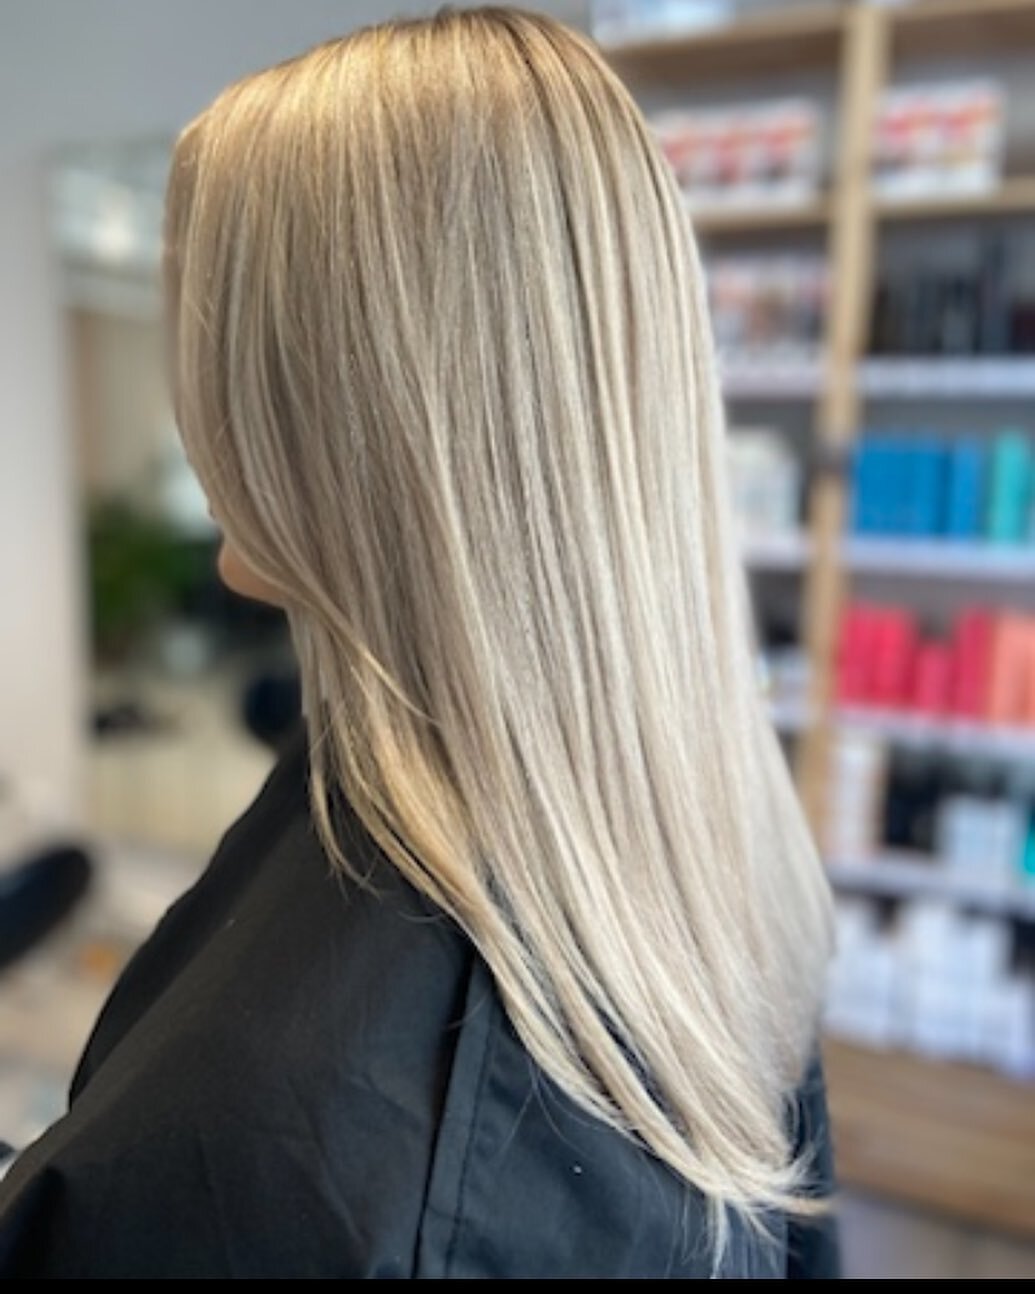 😍

#fris&ouml;rstockholm #hair #wella #color #mariatorget
#olaplexsweden #balayage #babylights #blond #blondehair #herrklippning #s&ouml;dermalm #fris&ouml;r #hornsgatan #highlights #haircolor #h&aring;r #toning #f&auml;rg #olaplex #brownhair #sling